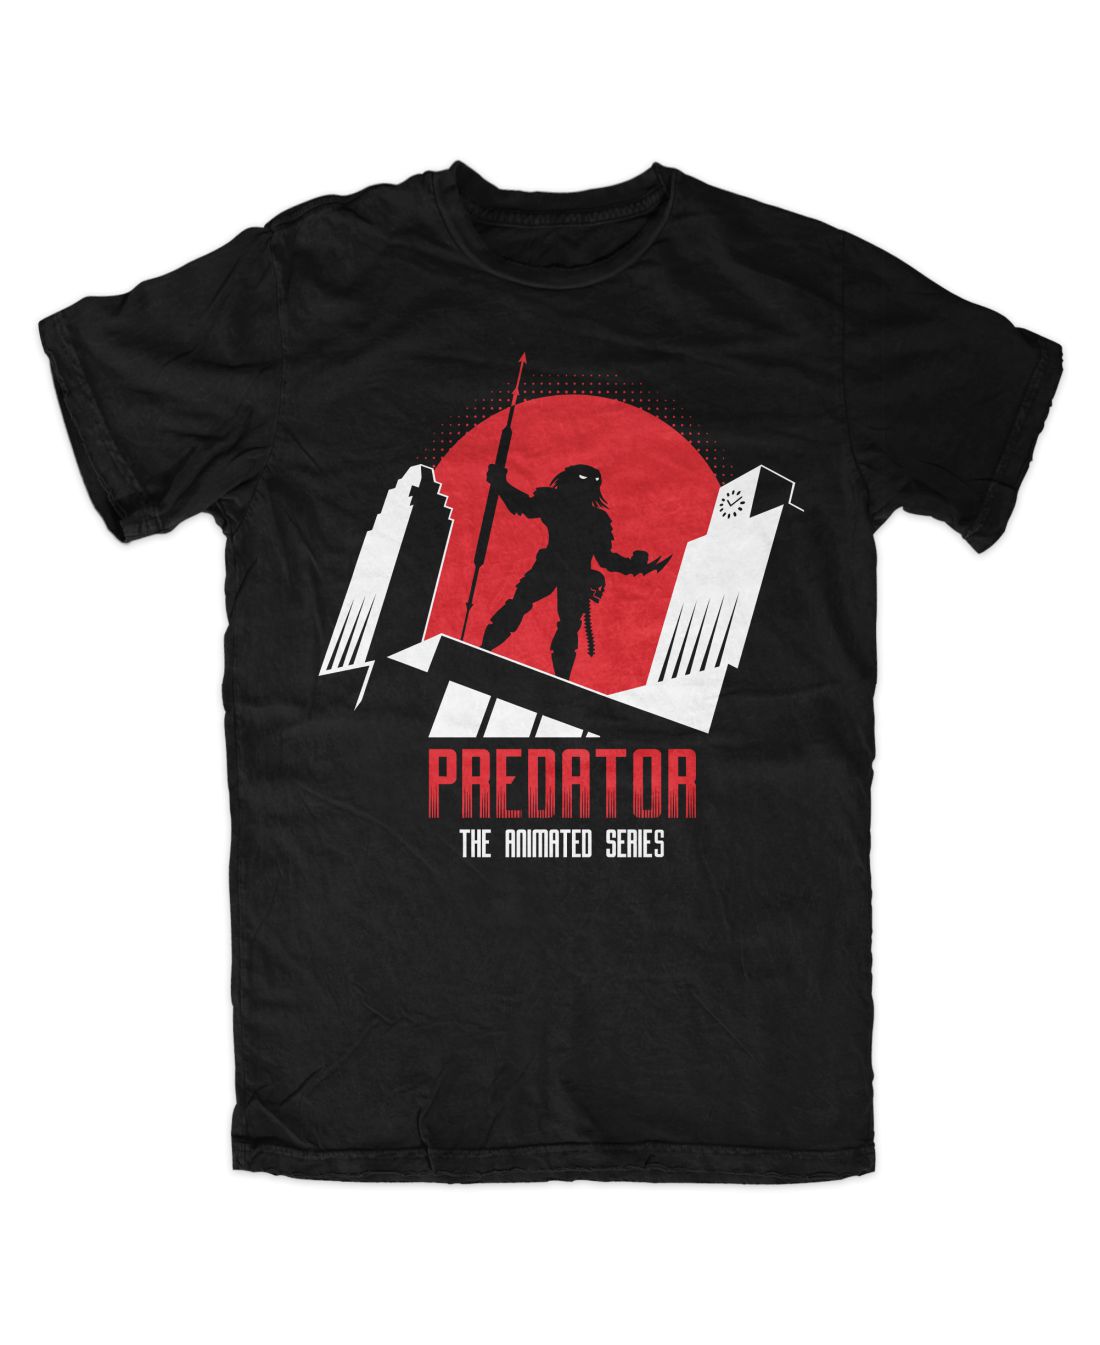 Predator - The Animated Series